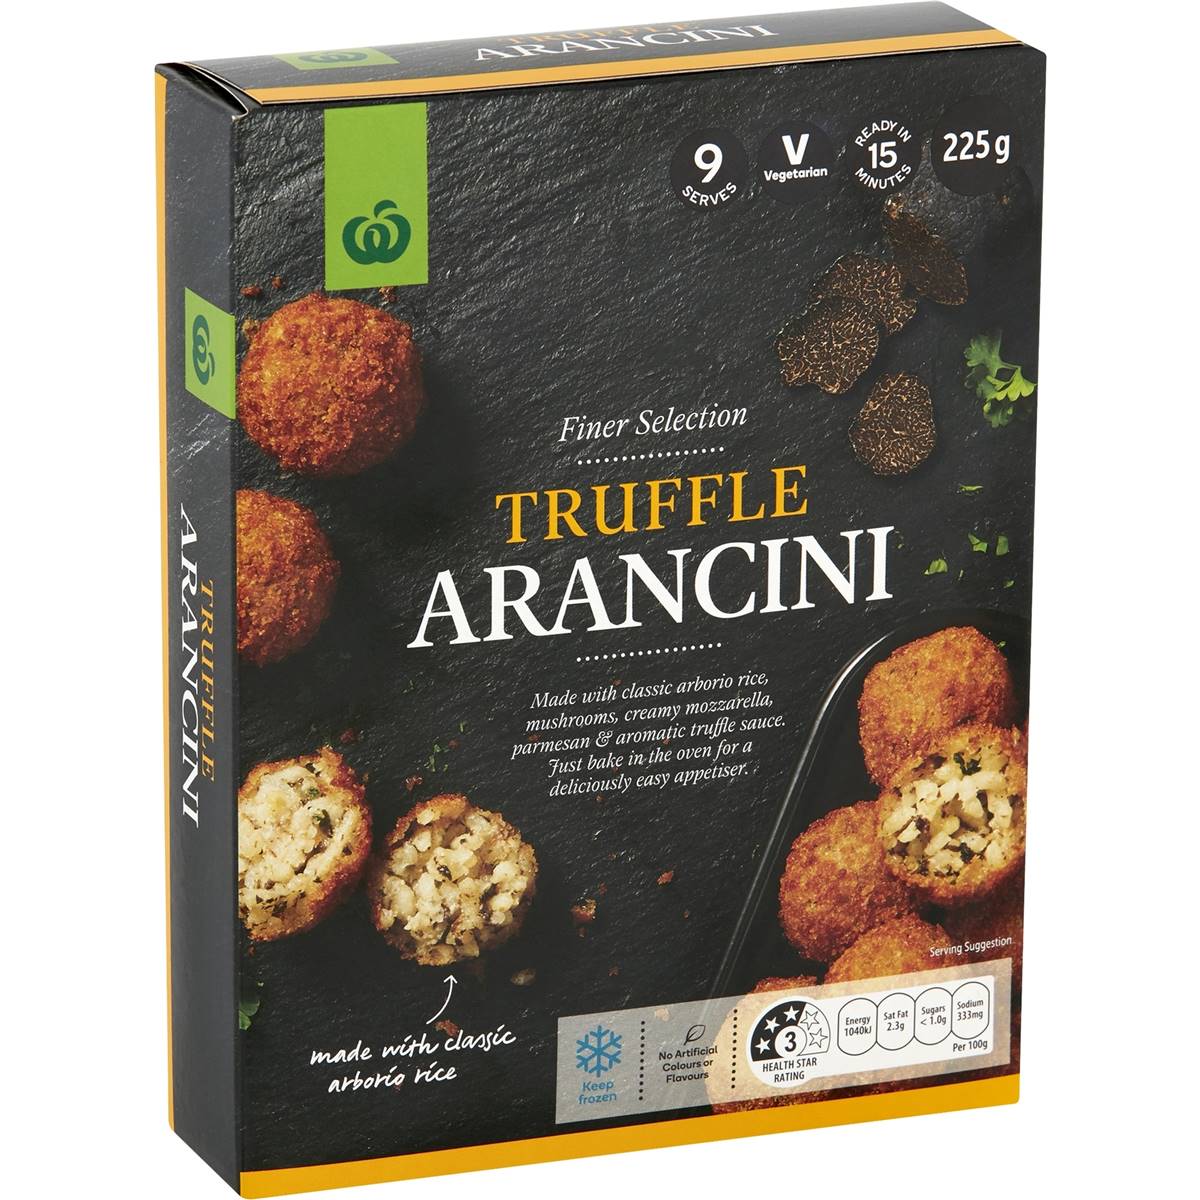 Calories in Woolworths Truffle Arancini